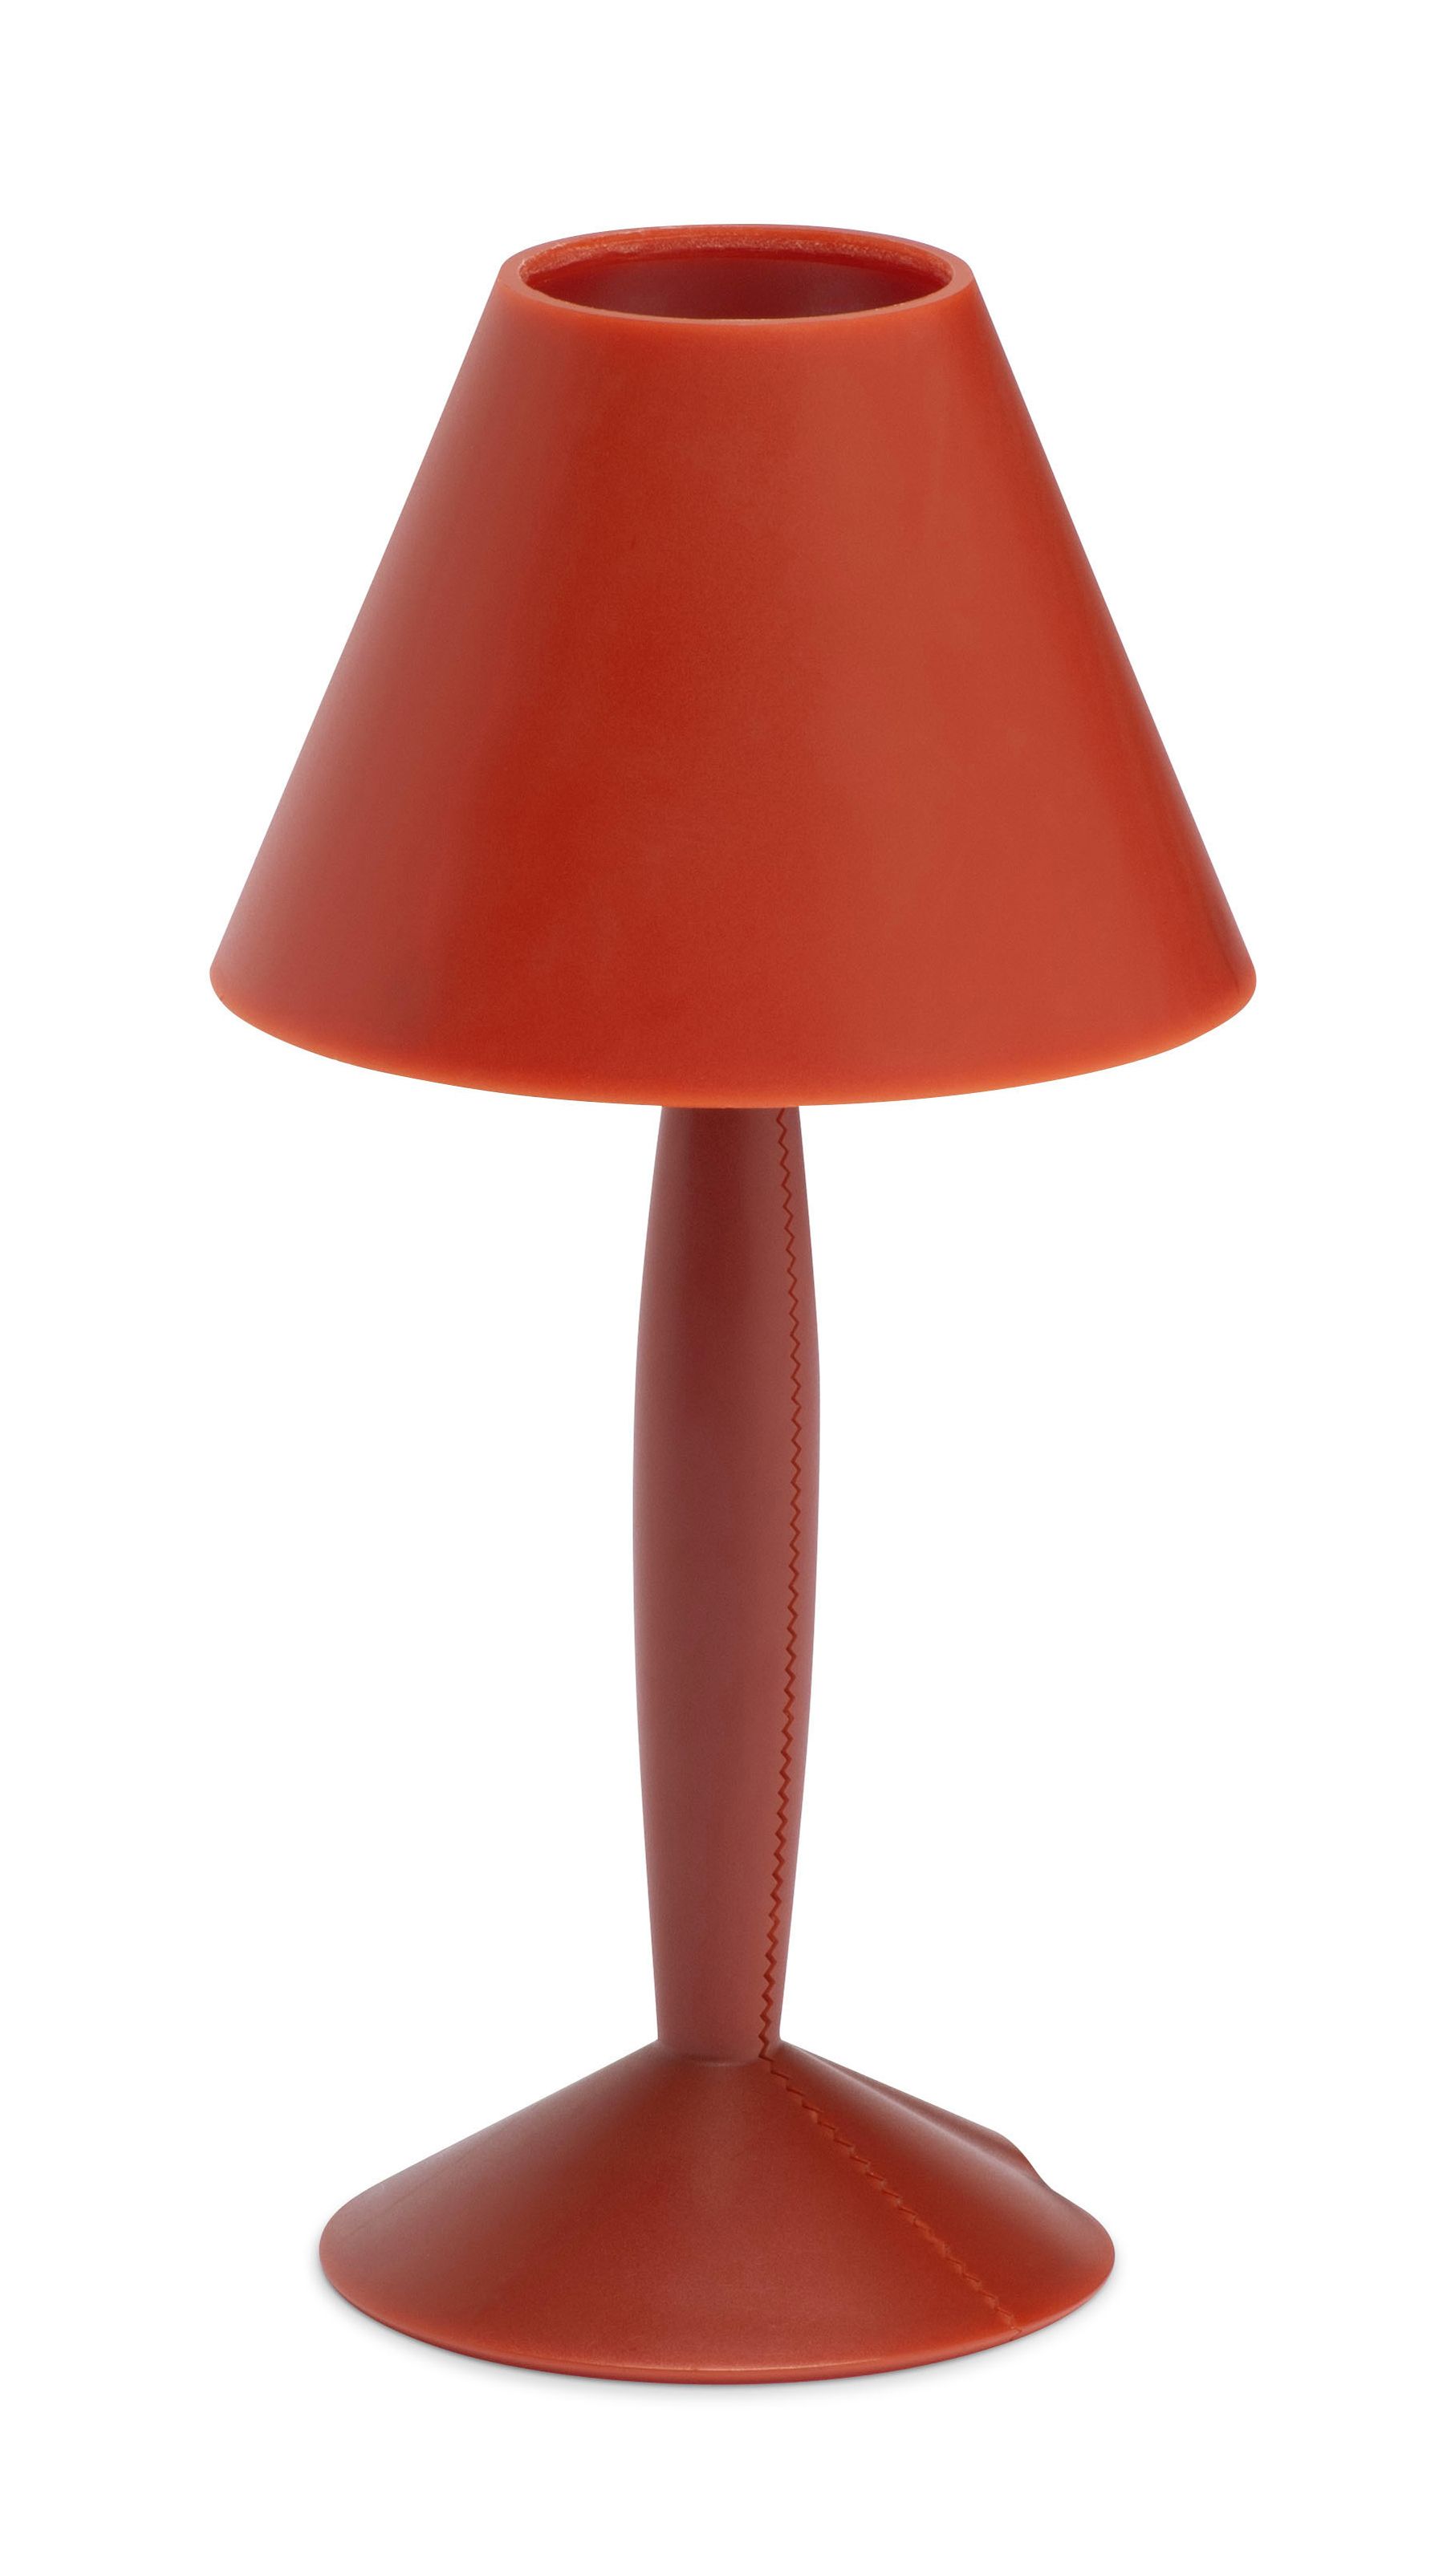 Philippe Starck, Miss Sissi Table Lamp, 1991